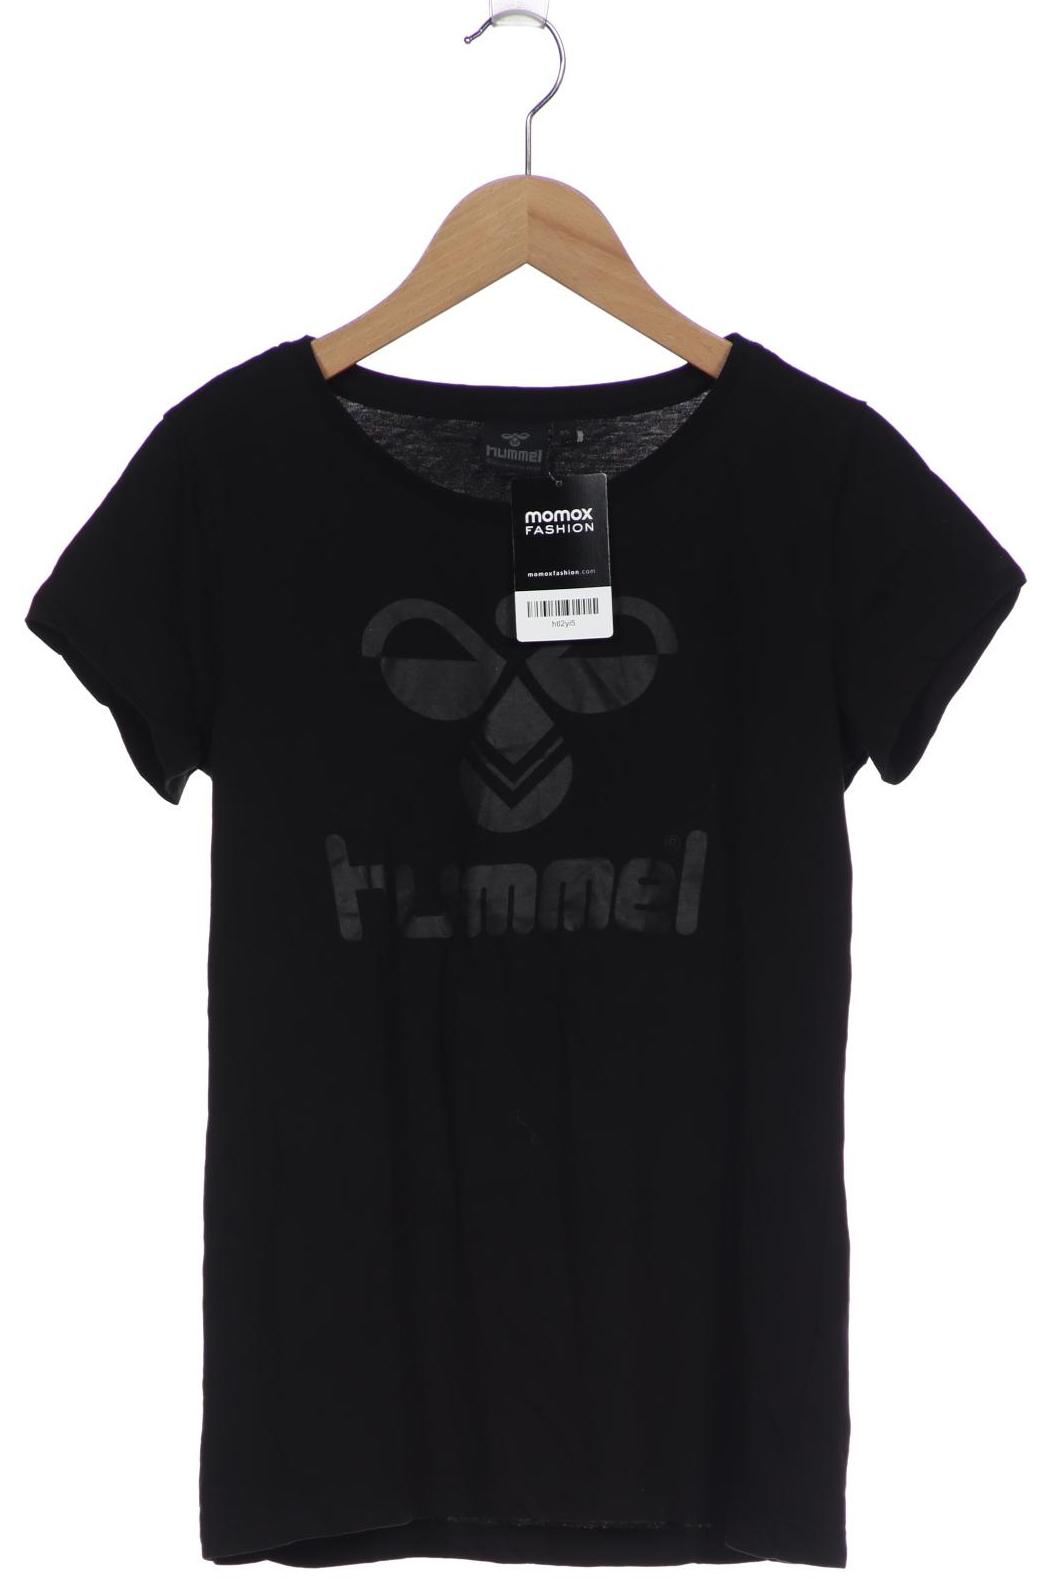 hummel Damen T-Shirt, schwarz, Gr. 34 von Hummel